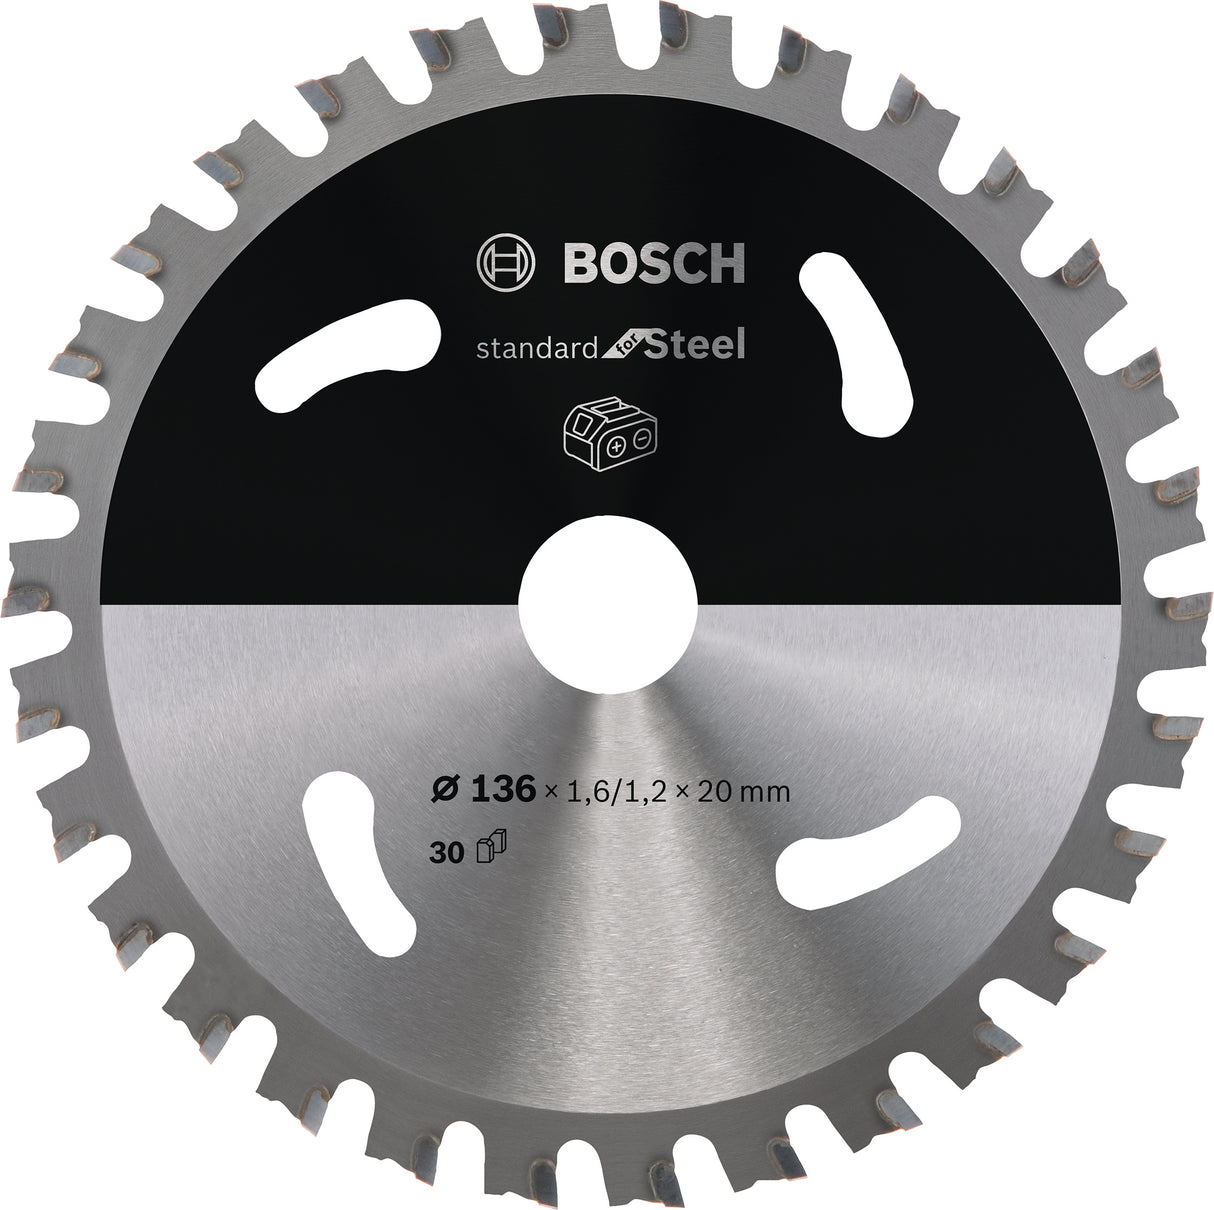 Bosch Professional Circular Saw Blade for Cordless Saws - Standard Steel, 136x1.6/1.2x20 T30